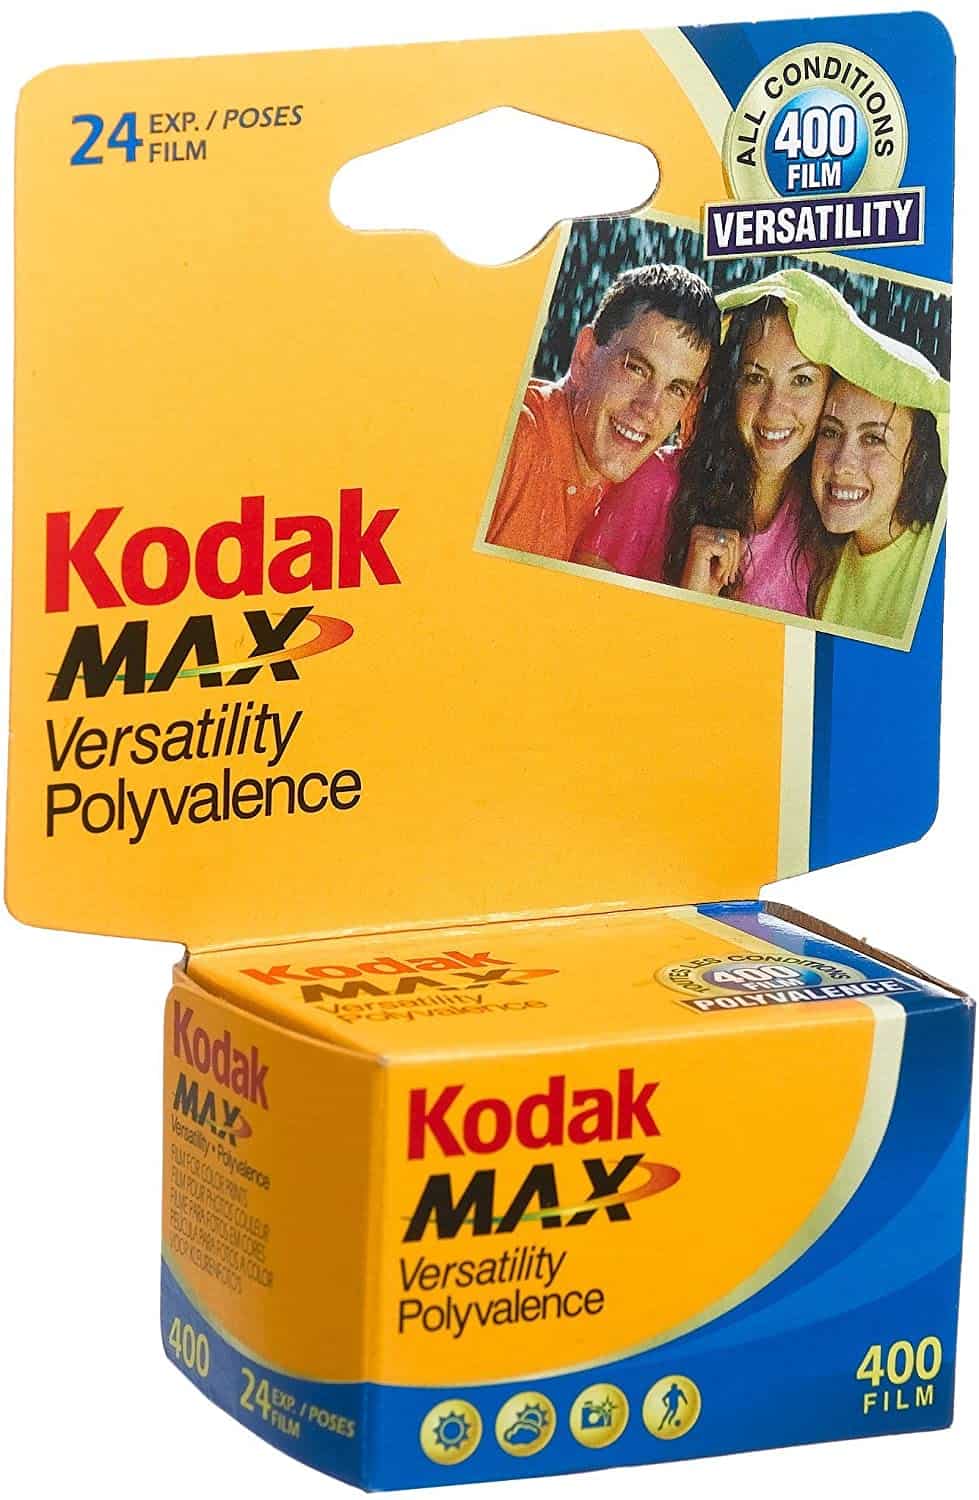 film rolls for the FunSaver disposable kodak camera